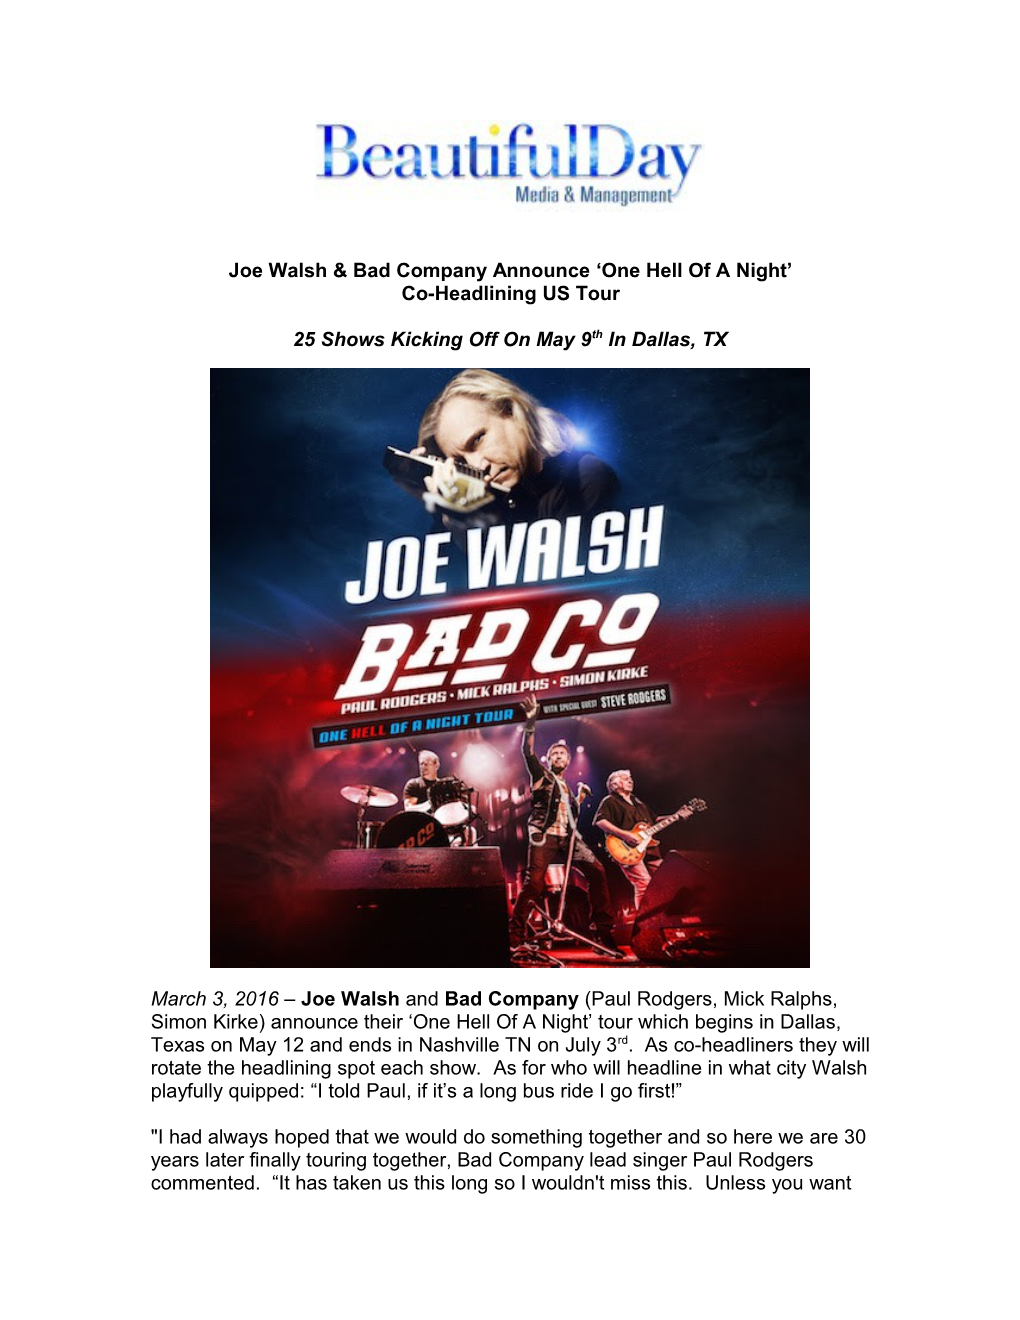 Joe Walsh & Bad Company Announce One Hell of a Night